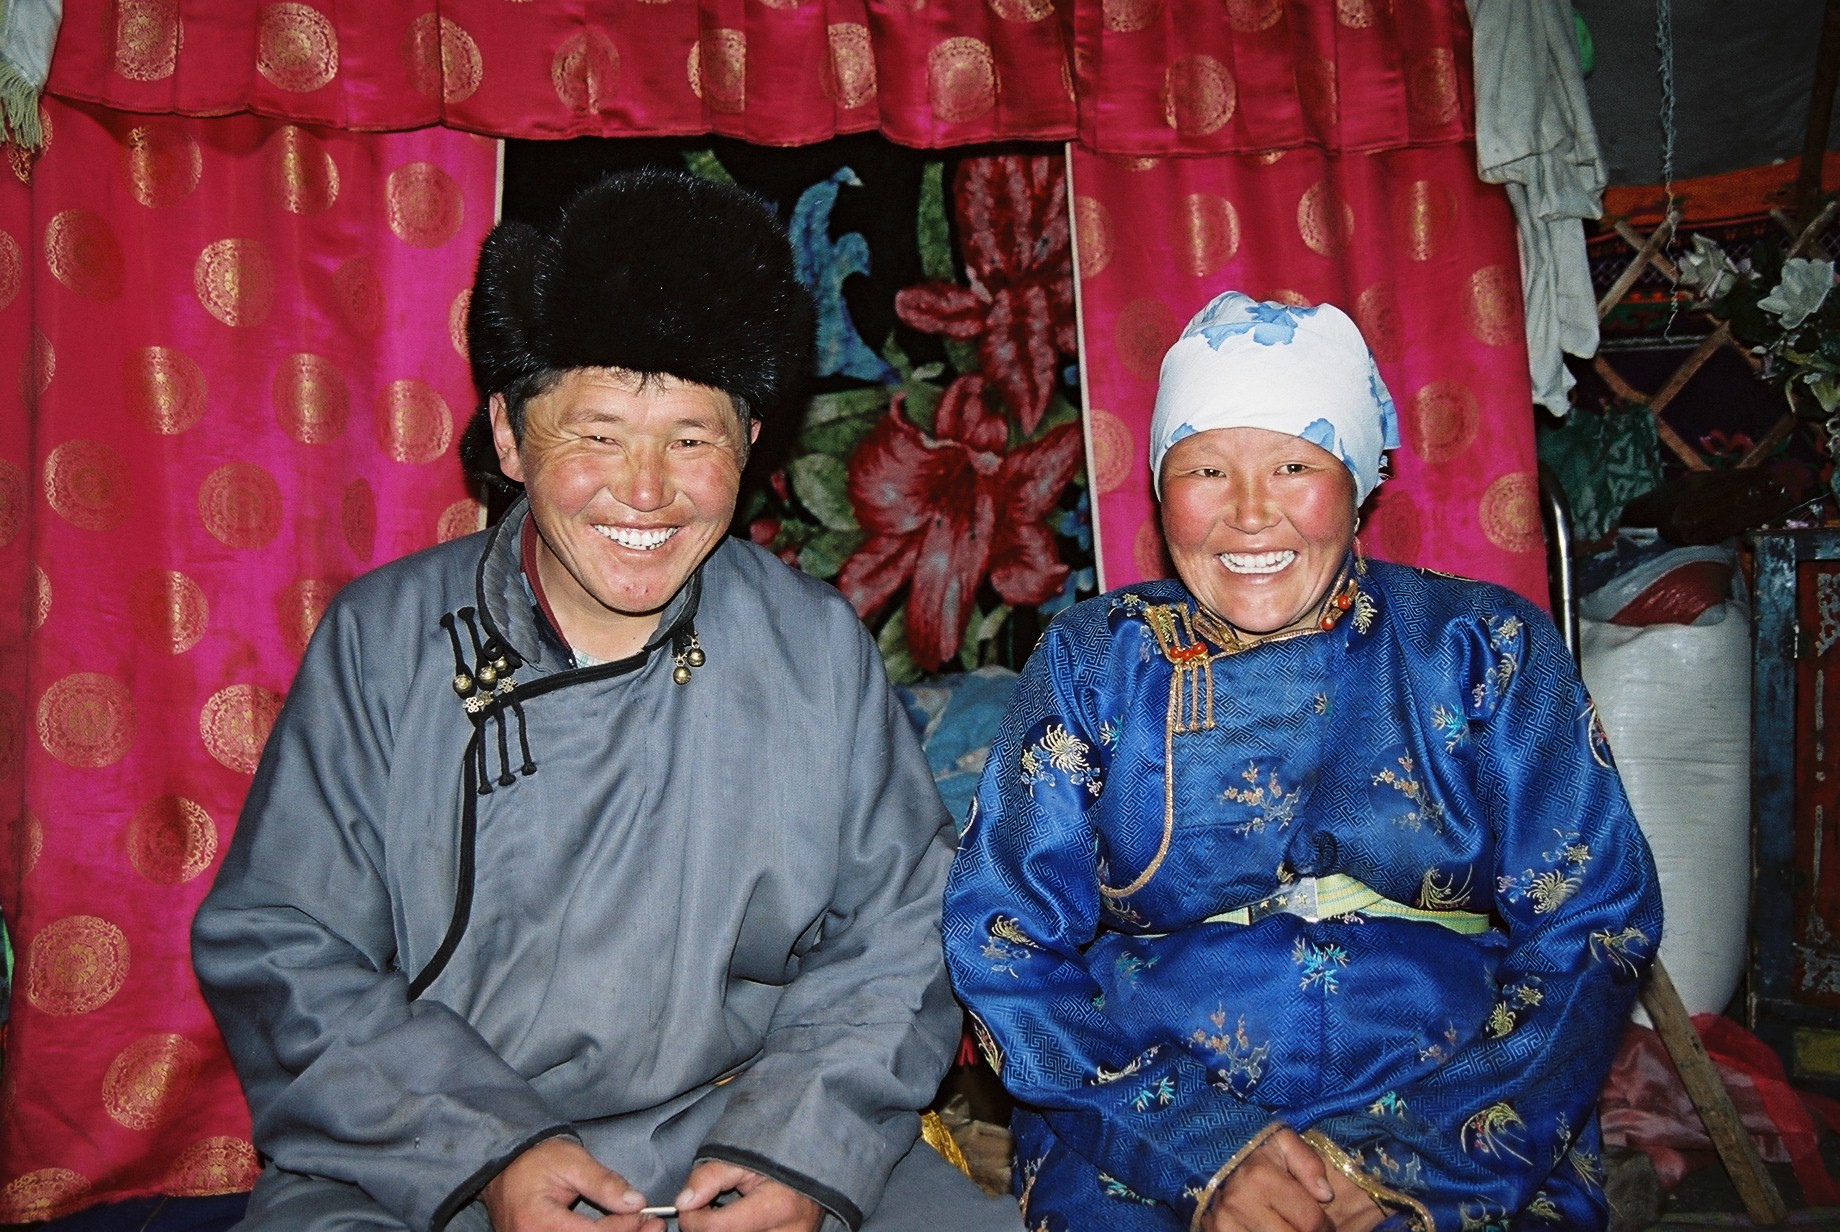 Faces-of-Mongolia-4.jpg